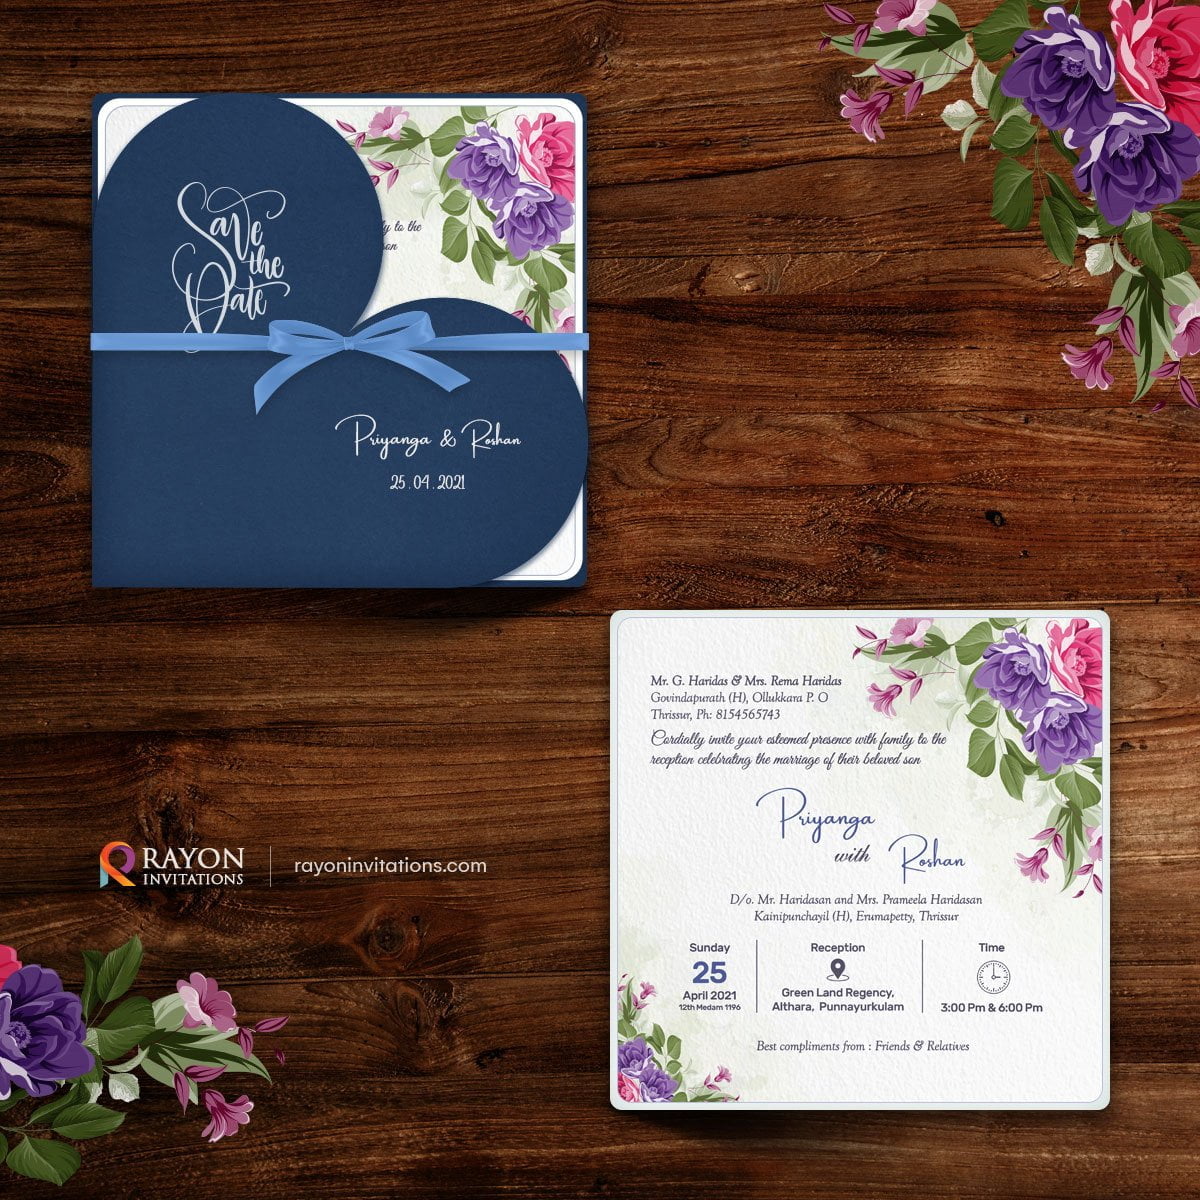 Wedding Cards & Invitation Cards at Chennai